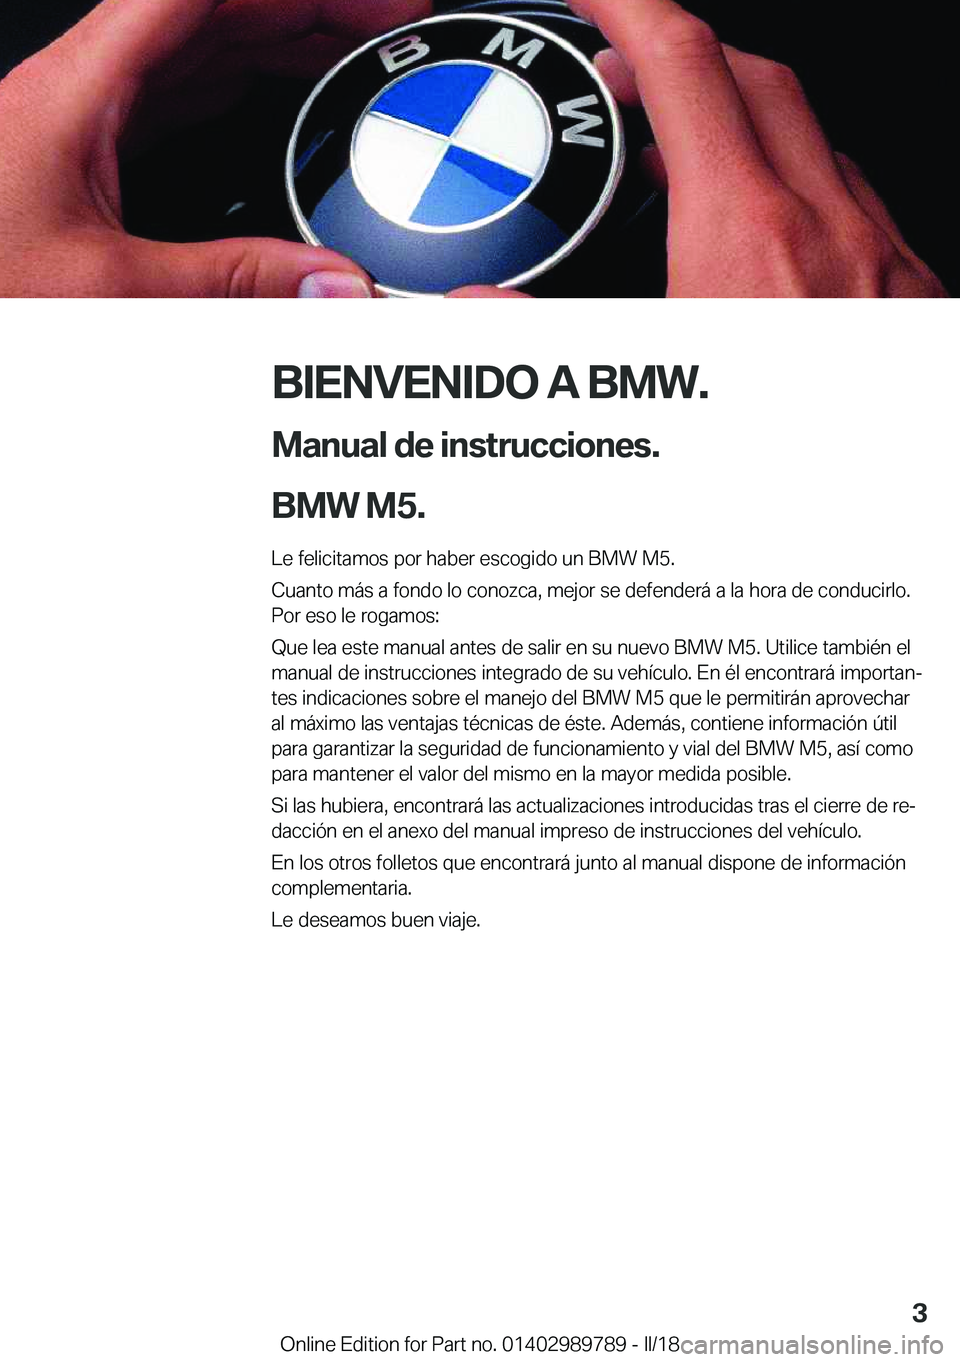 BMW M5 2018  Manuales de Empleo (in Spanish) �B�I�E�N�V�E�N�I�D�O��A��B�M�W�.
�M�a�n�u�a�l��d�e��i�n�s�t�r�u�c�c�i�o�n�e�s�.
�B�M�W��M�5�. �L�e� �f�e�l�i�c�i�t�a�m�o�s� �p�o�r� �h�a�b�e�r� �e�s�c�o�g�i�d�o� �u�n� �B�M�W� �M�5�.
�C�u�a�n�t�o